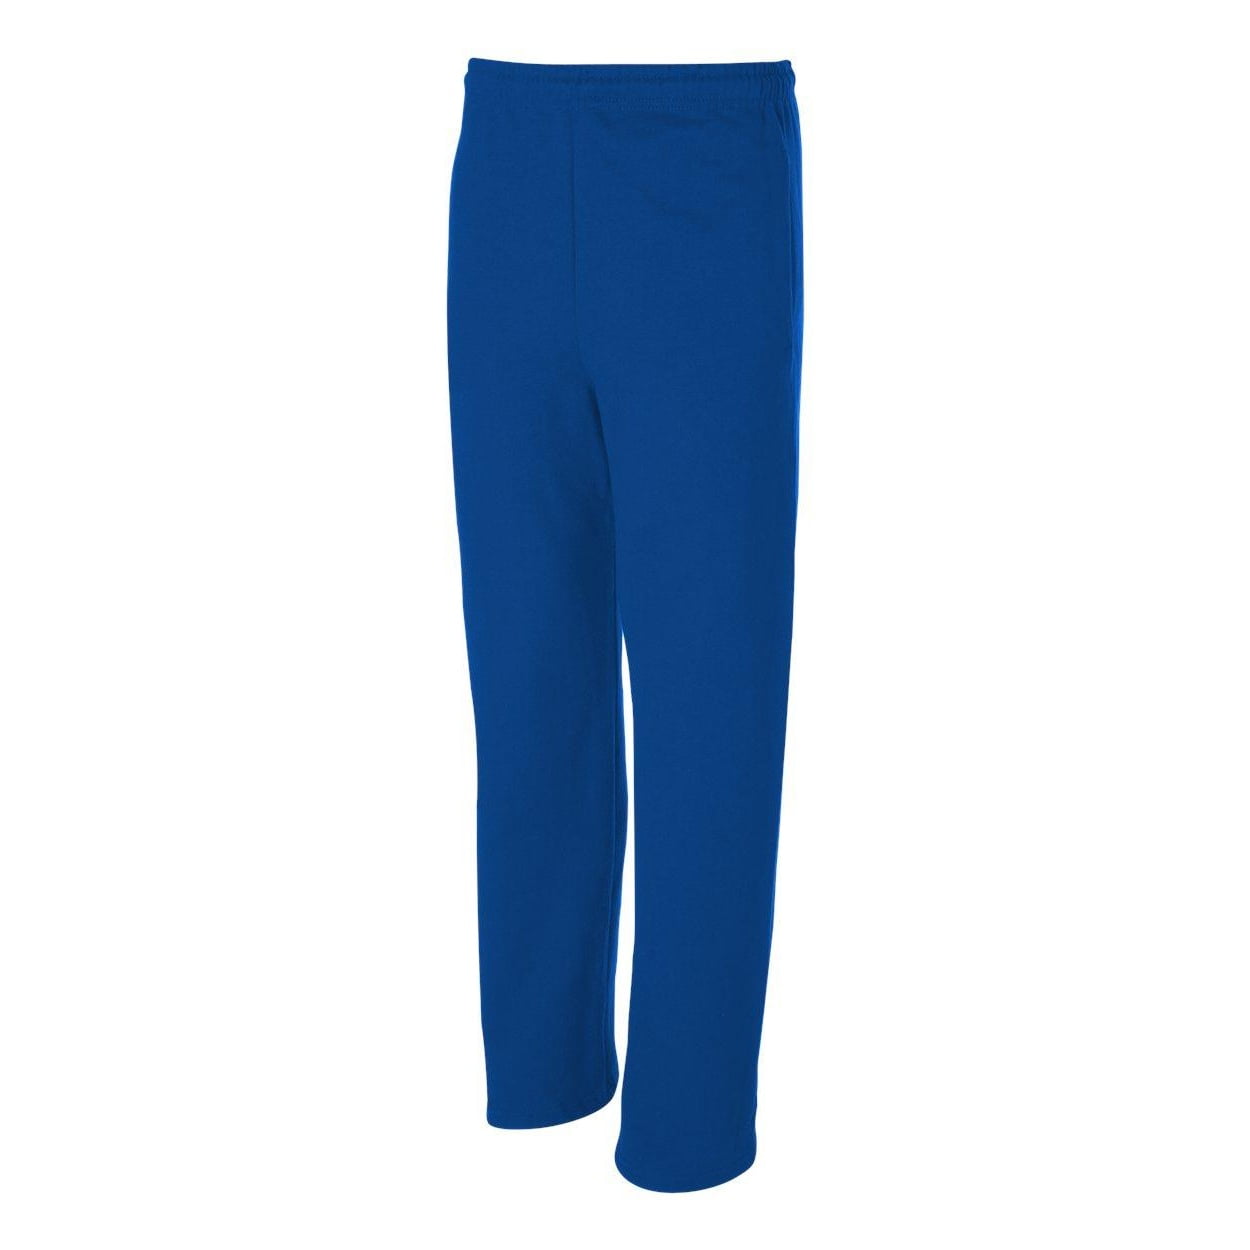 JERZEES - NuBlend Open-Bottom Sweatpants with Pockets - 974MPR - Royal -  Size: 2XL 